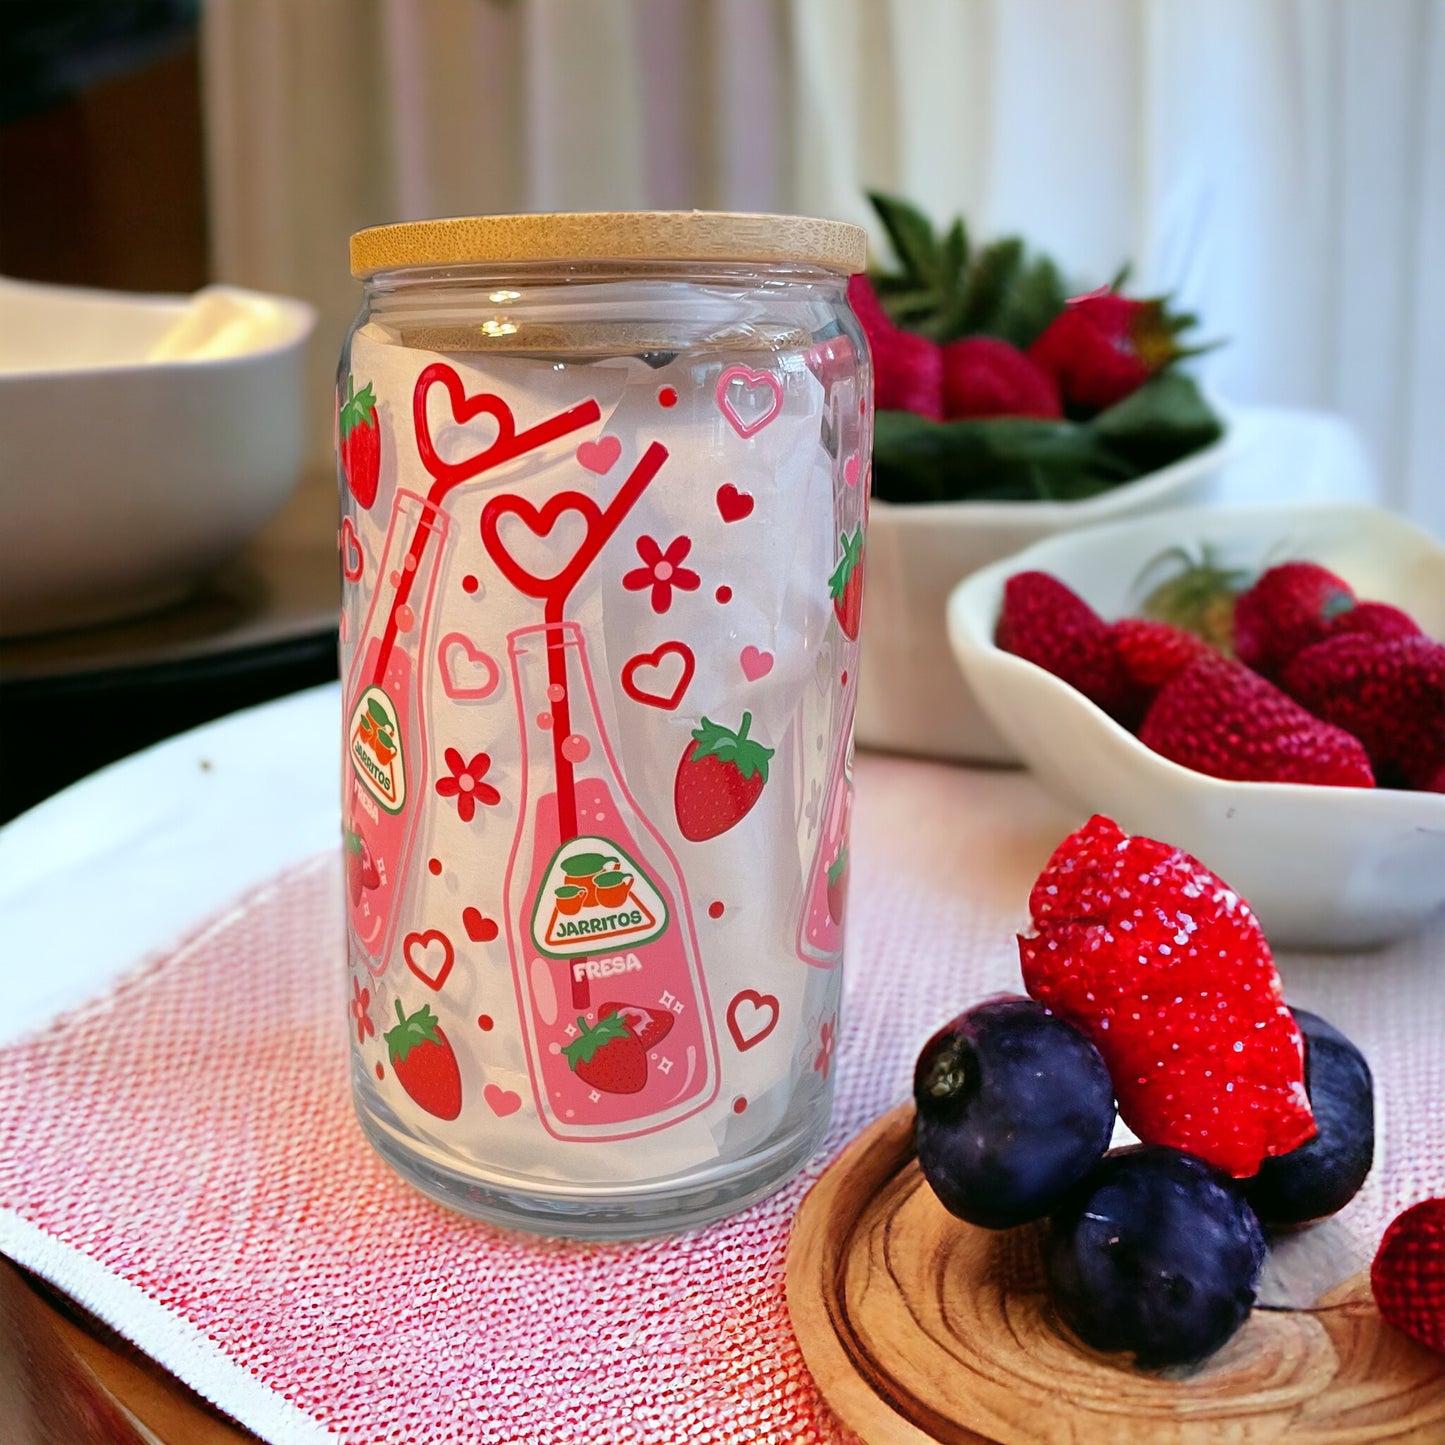 Strawberry Jarrito 12oz. Glass Can with Straw, Beer Cans, Glass Cans, Jarrito Cups, Jarrito de Fresa Glass Cups with Straws, Gifts for Him, Gifts for Her, Jarritos, Decorative Cups